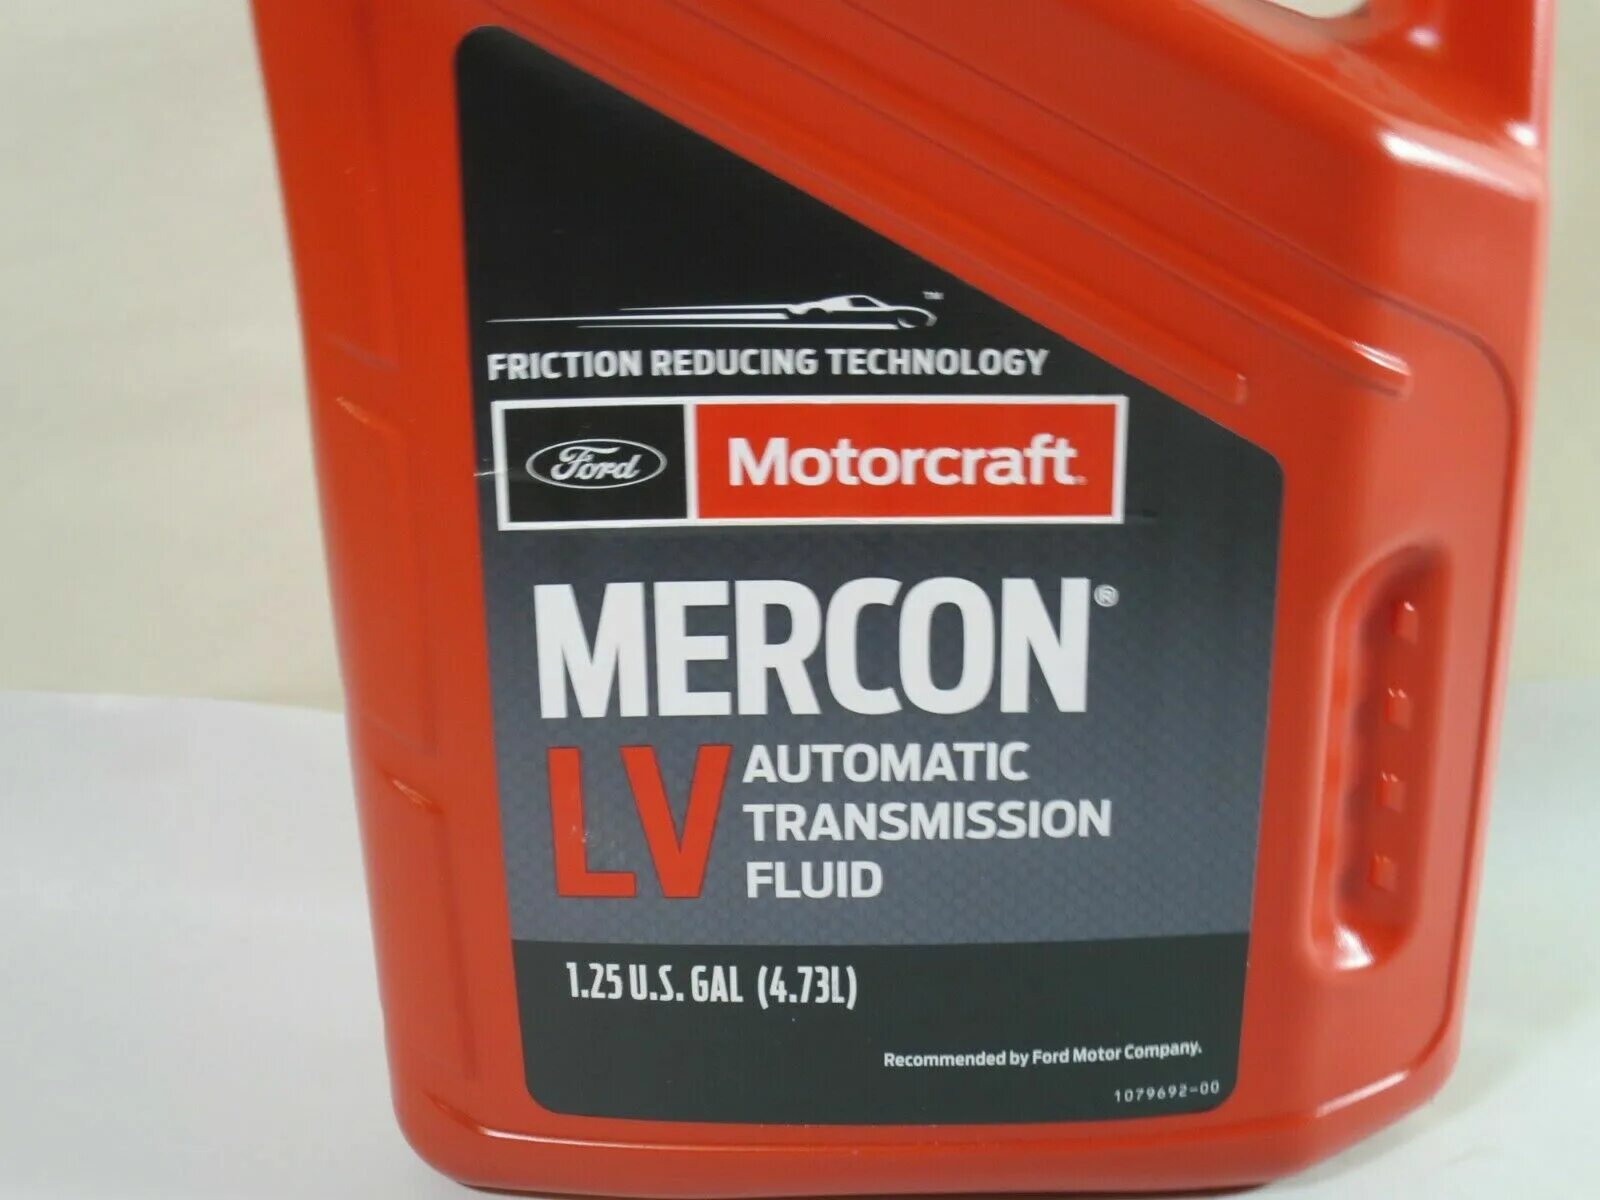 Моторкрафт Меркон lv. Motorcraft Mercon lv Automatic transmission Fluid. Xt105q3lv Motorcraft. Motorcraft Mercon ATF.